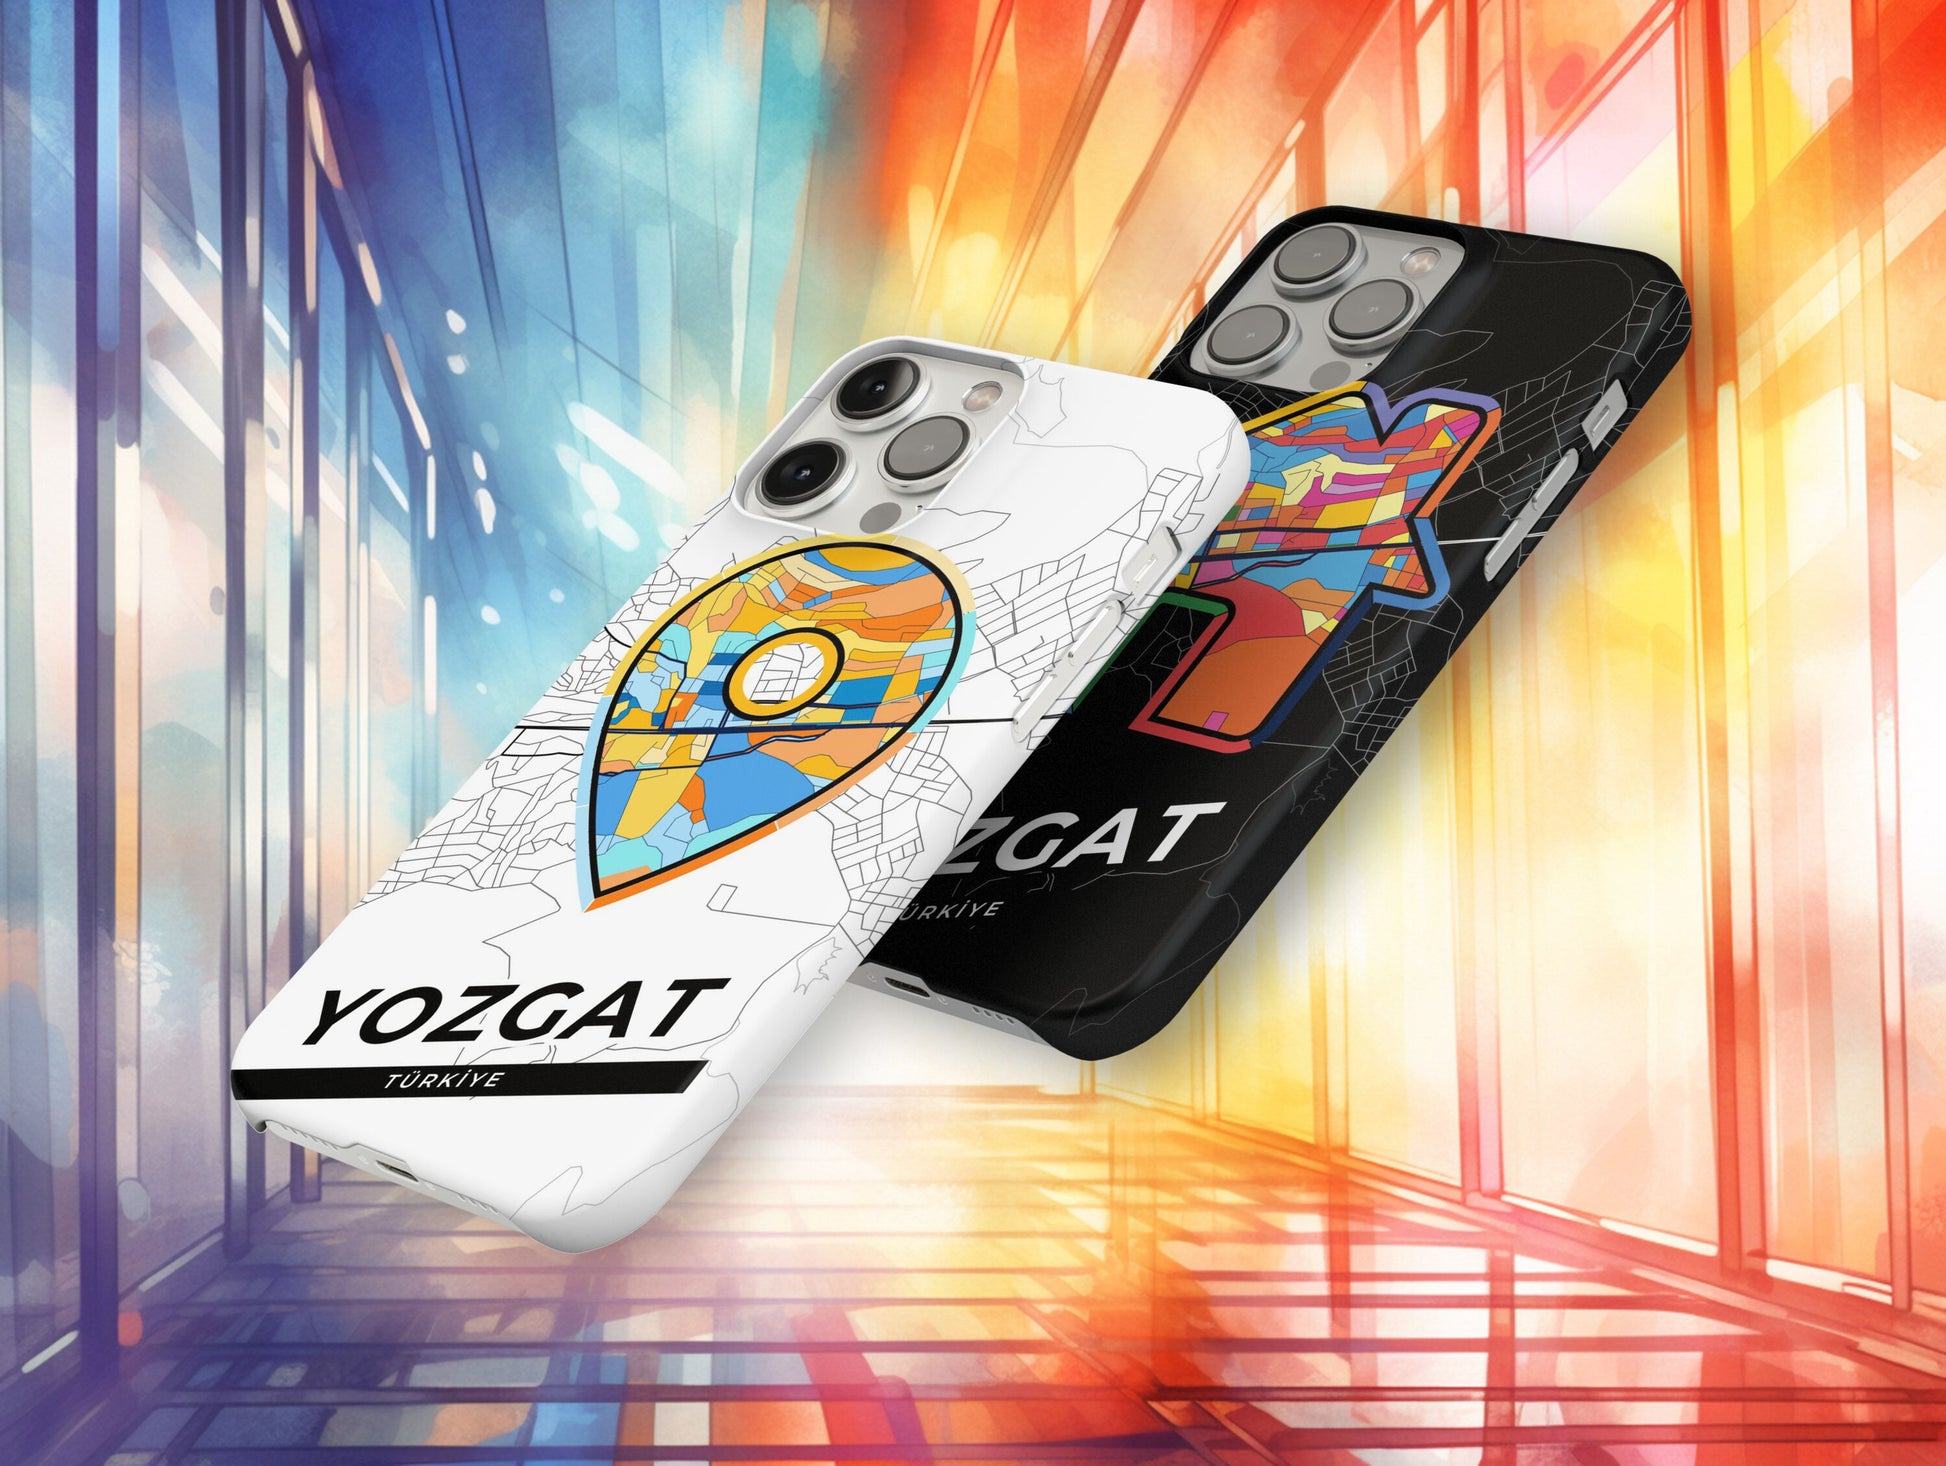 Yozgat Turkey slim phone case with colorful icon